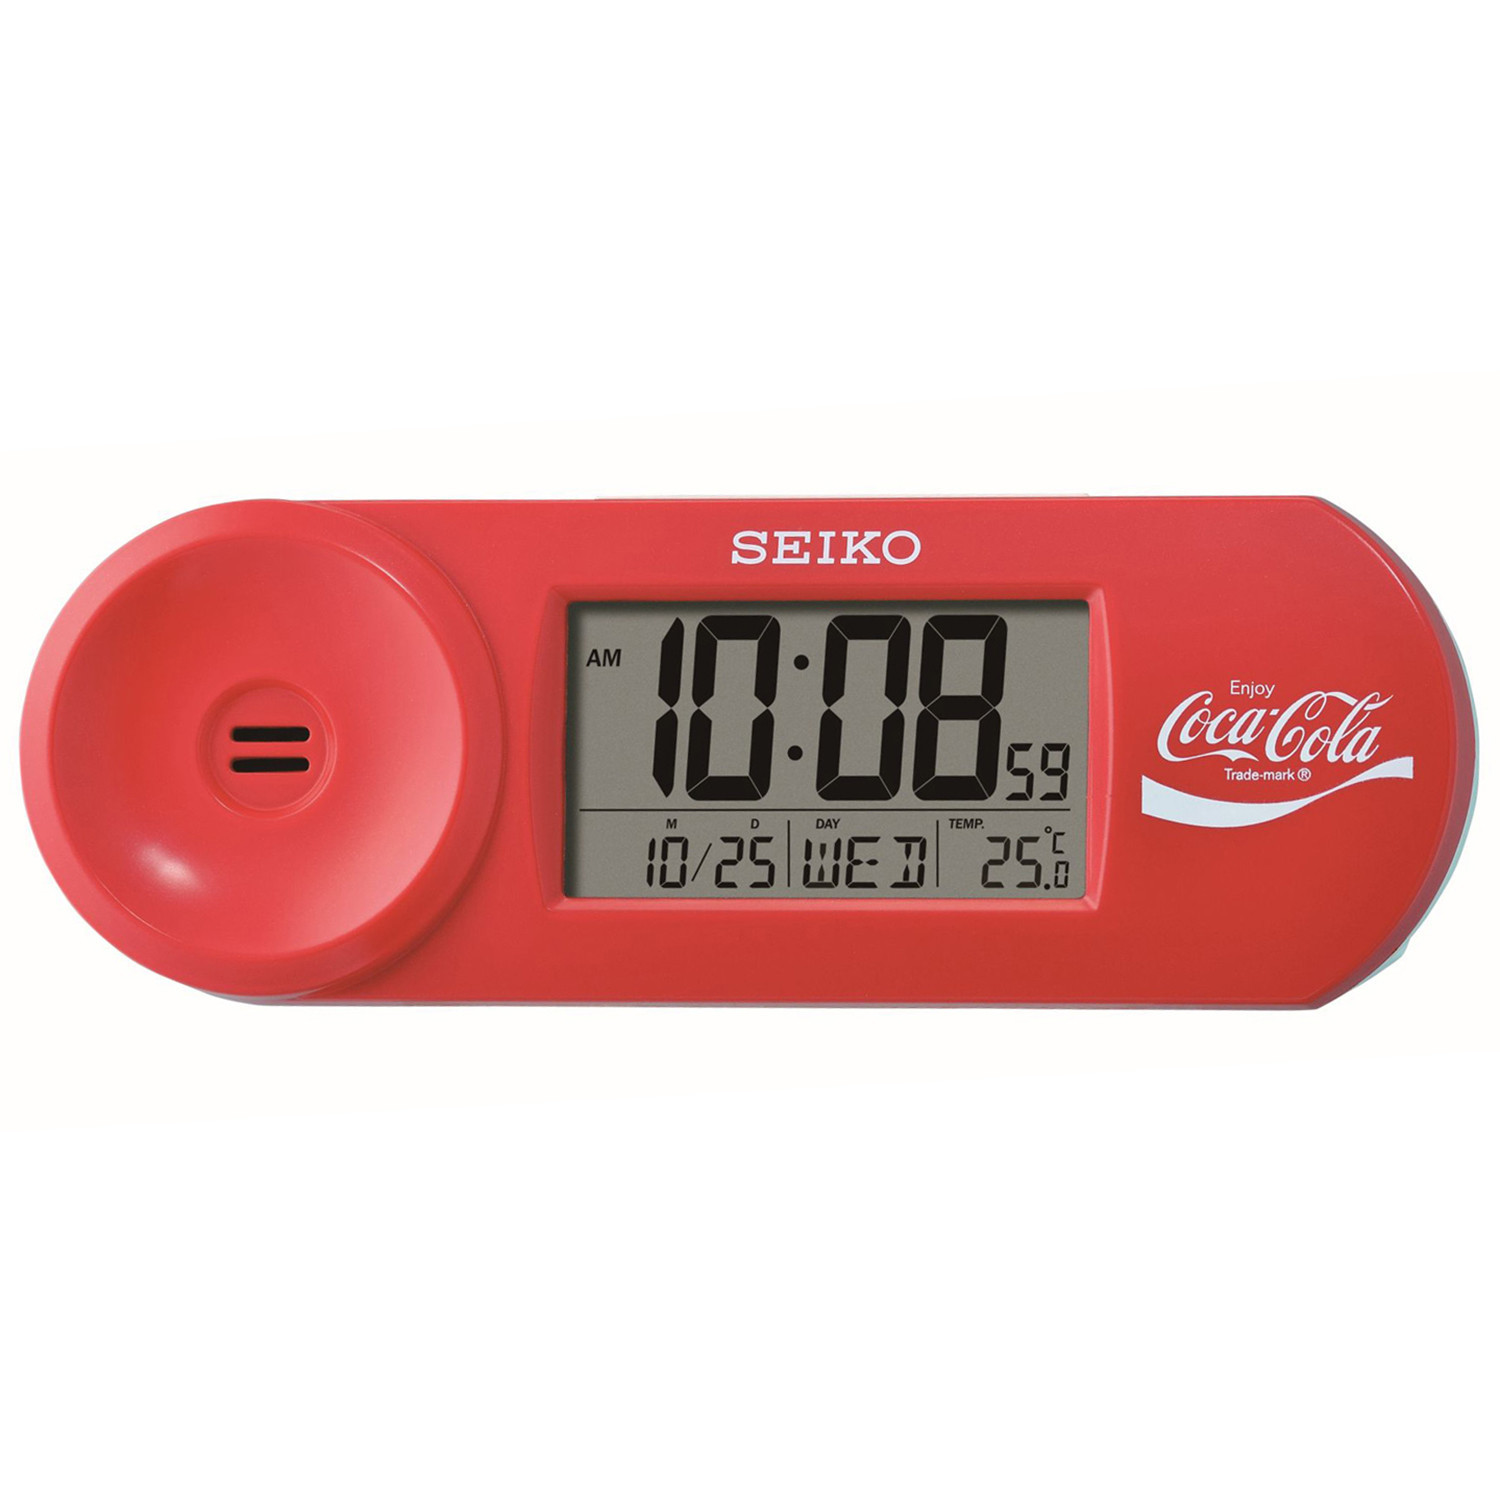 Réveil Seiko Coca-cola Digital rouge